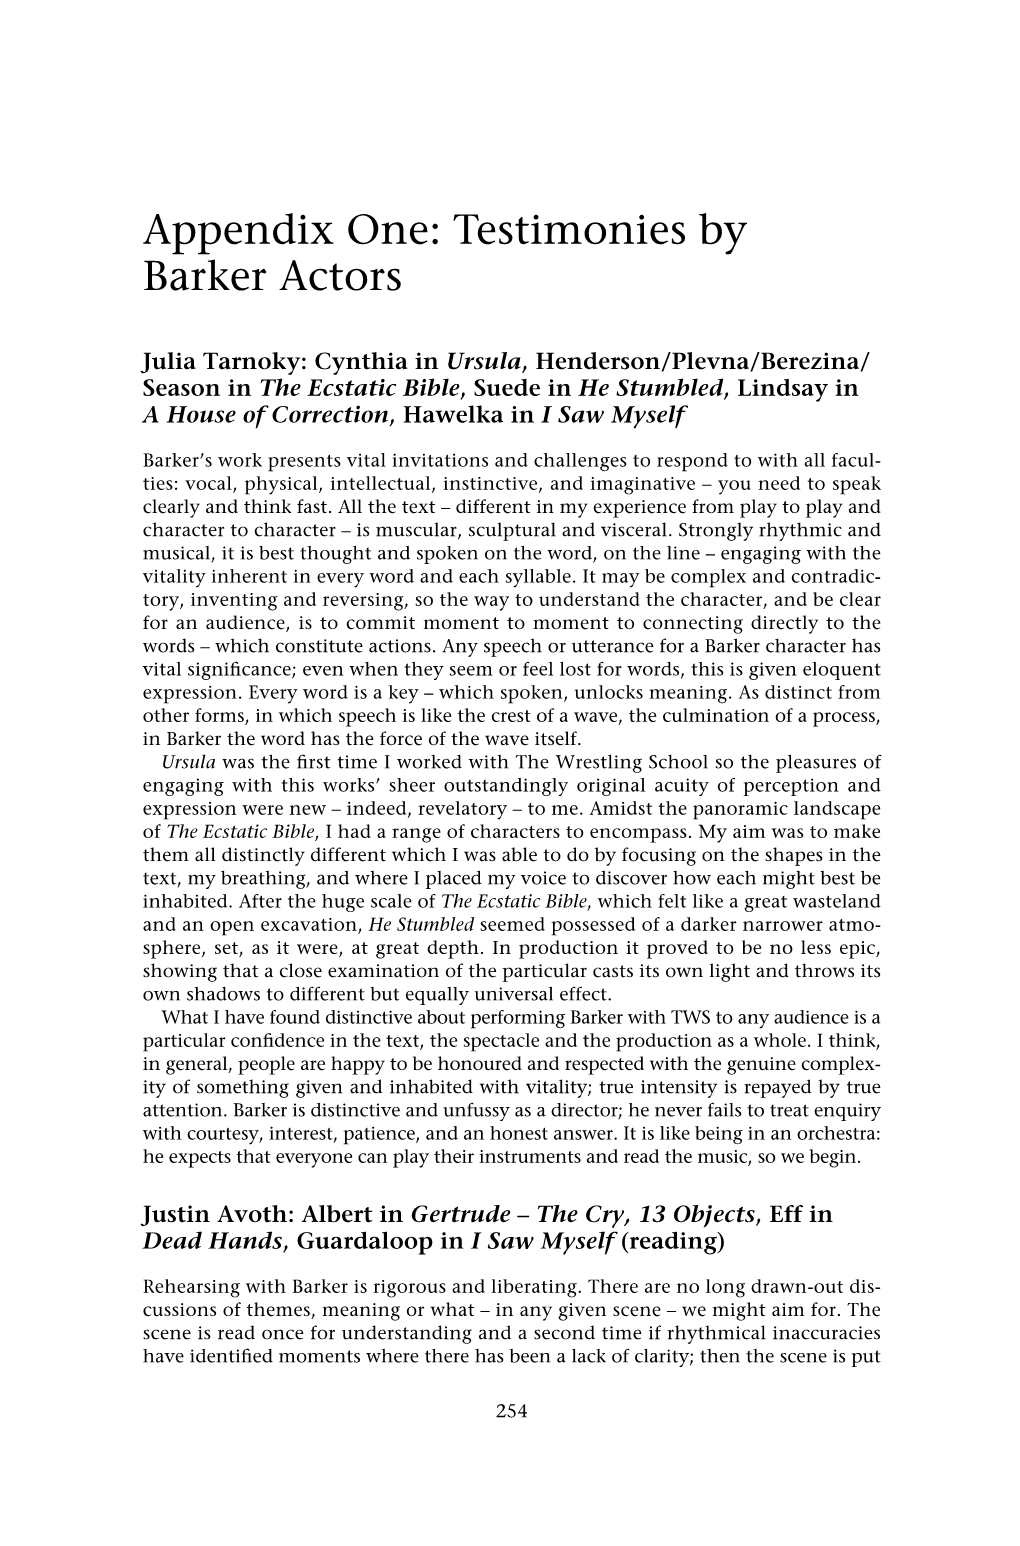 Appendix One: Testimonies by Barker Actors